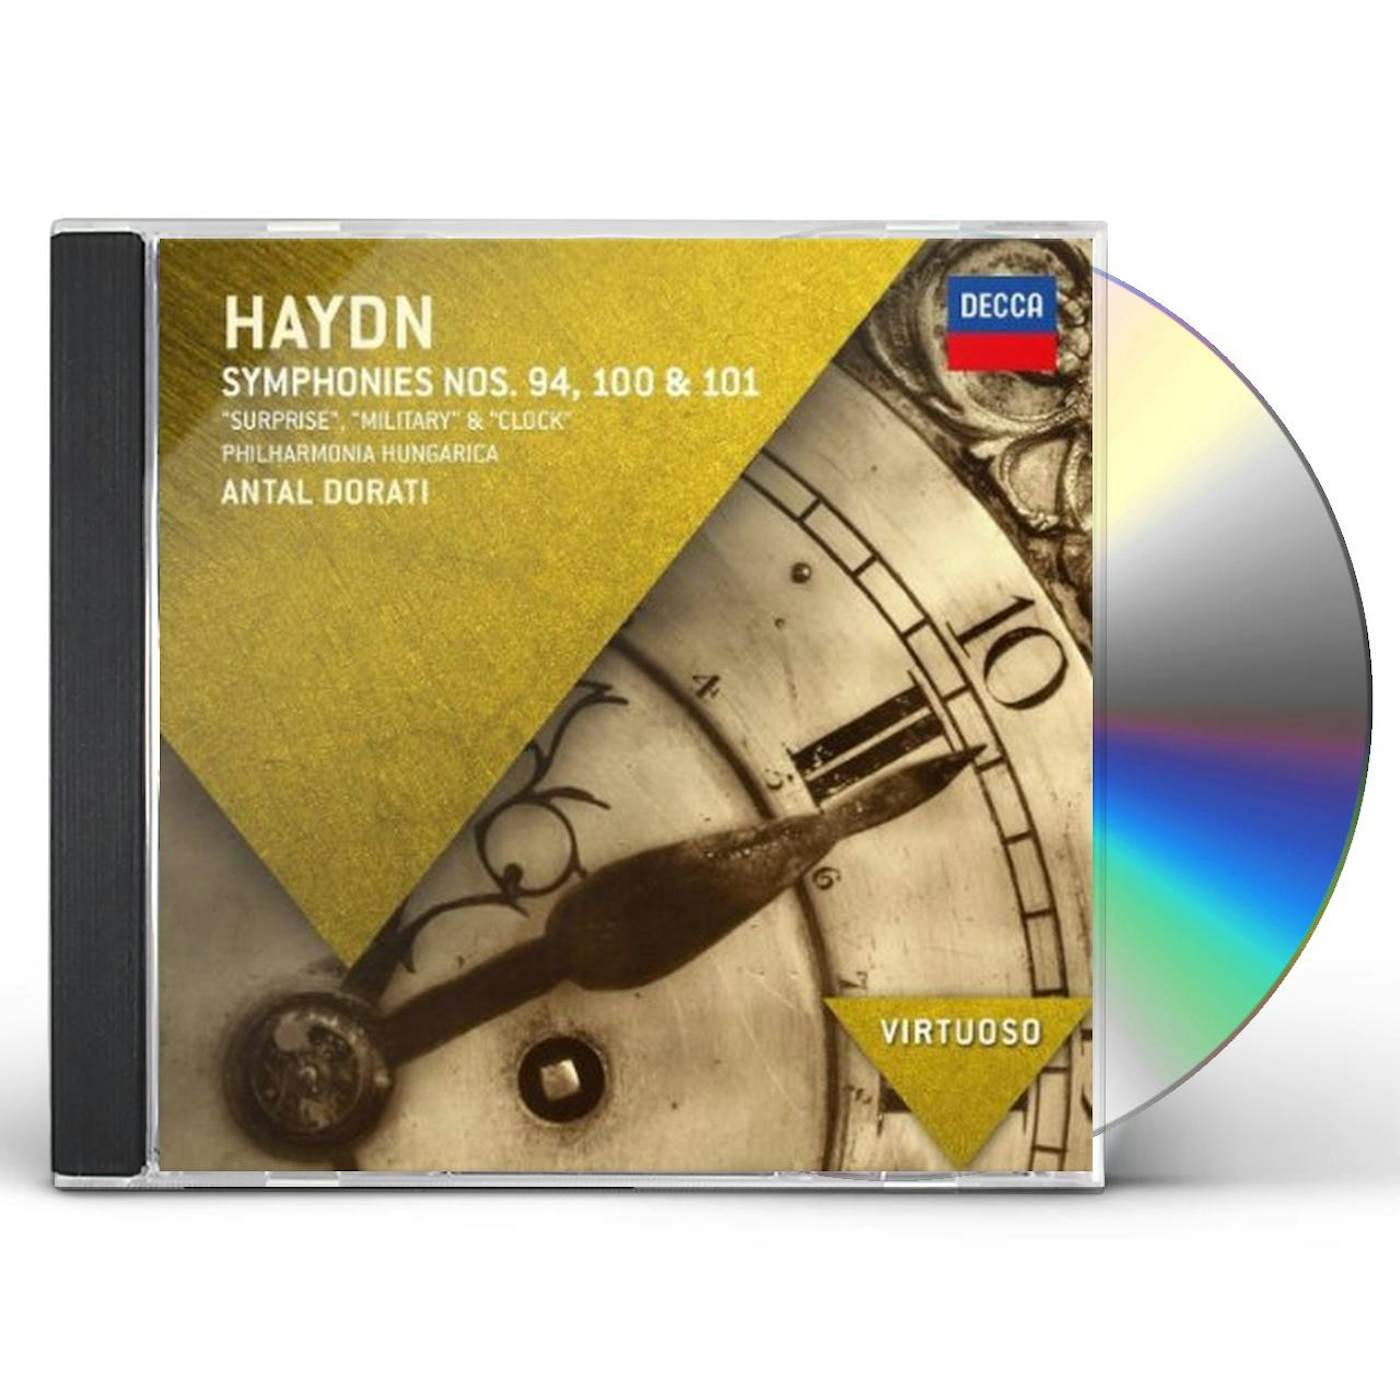 Haydn VIRTUOSO: SYMPHONIES NOS. 94 100 101 CD